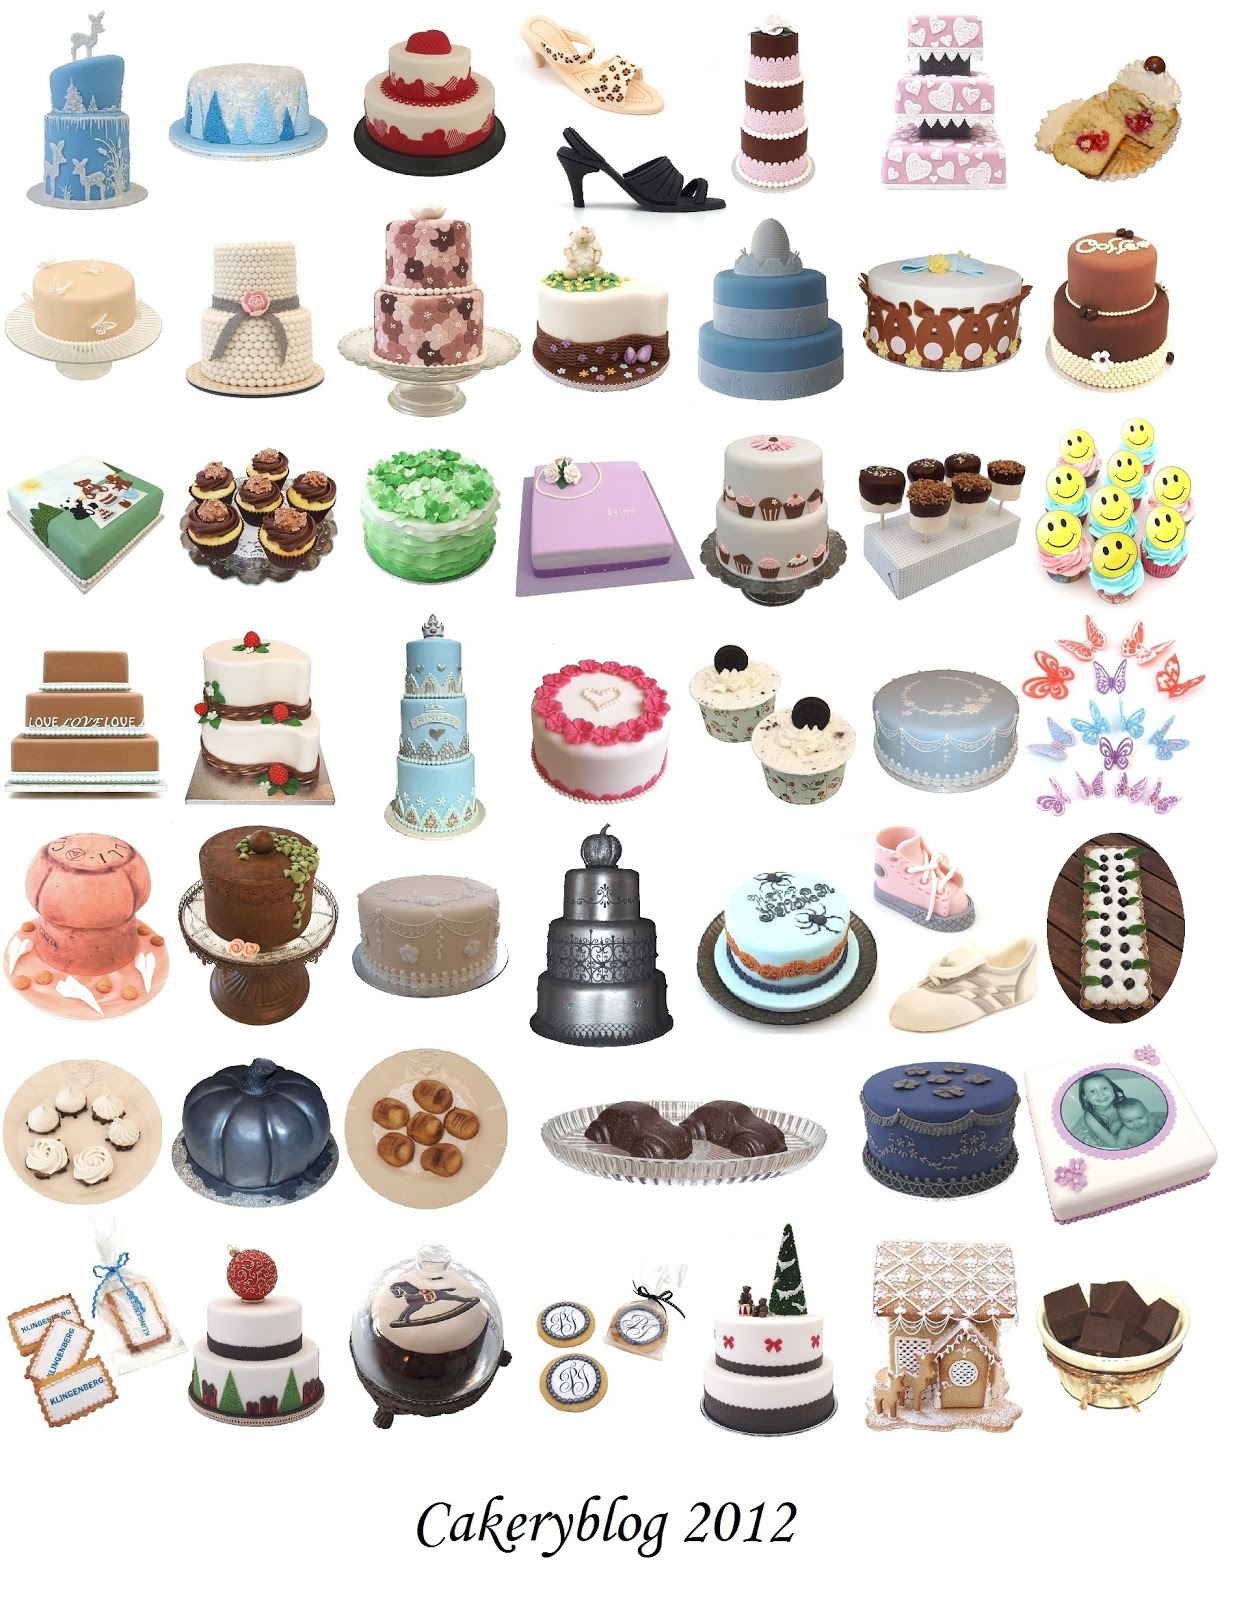 Cakeryblog: My cakes in 2012